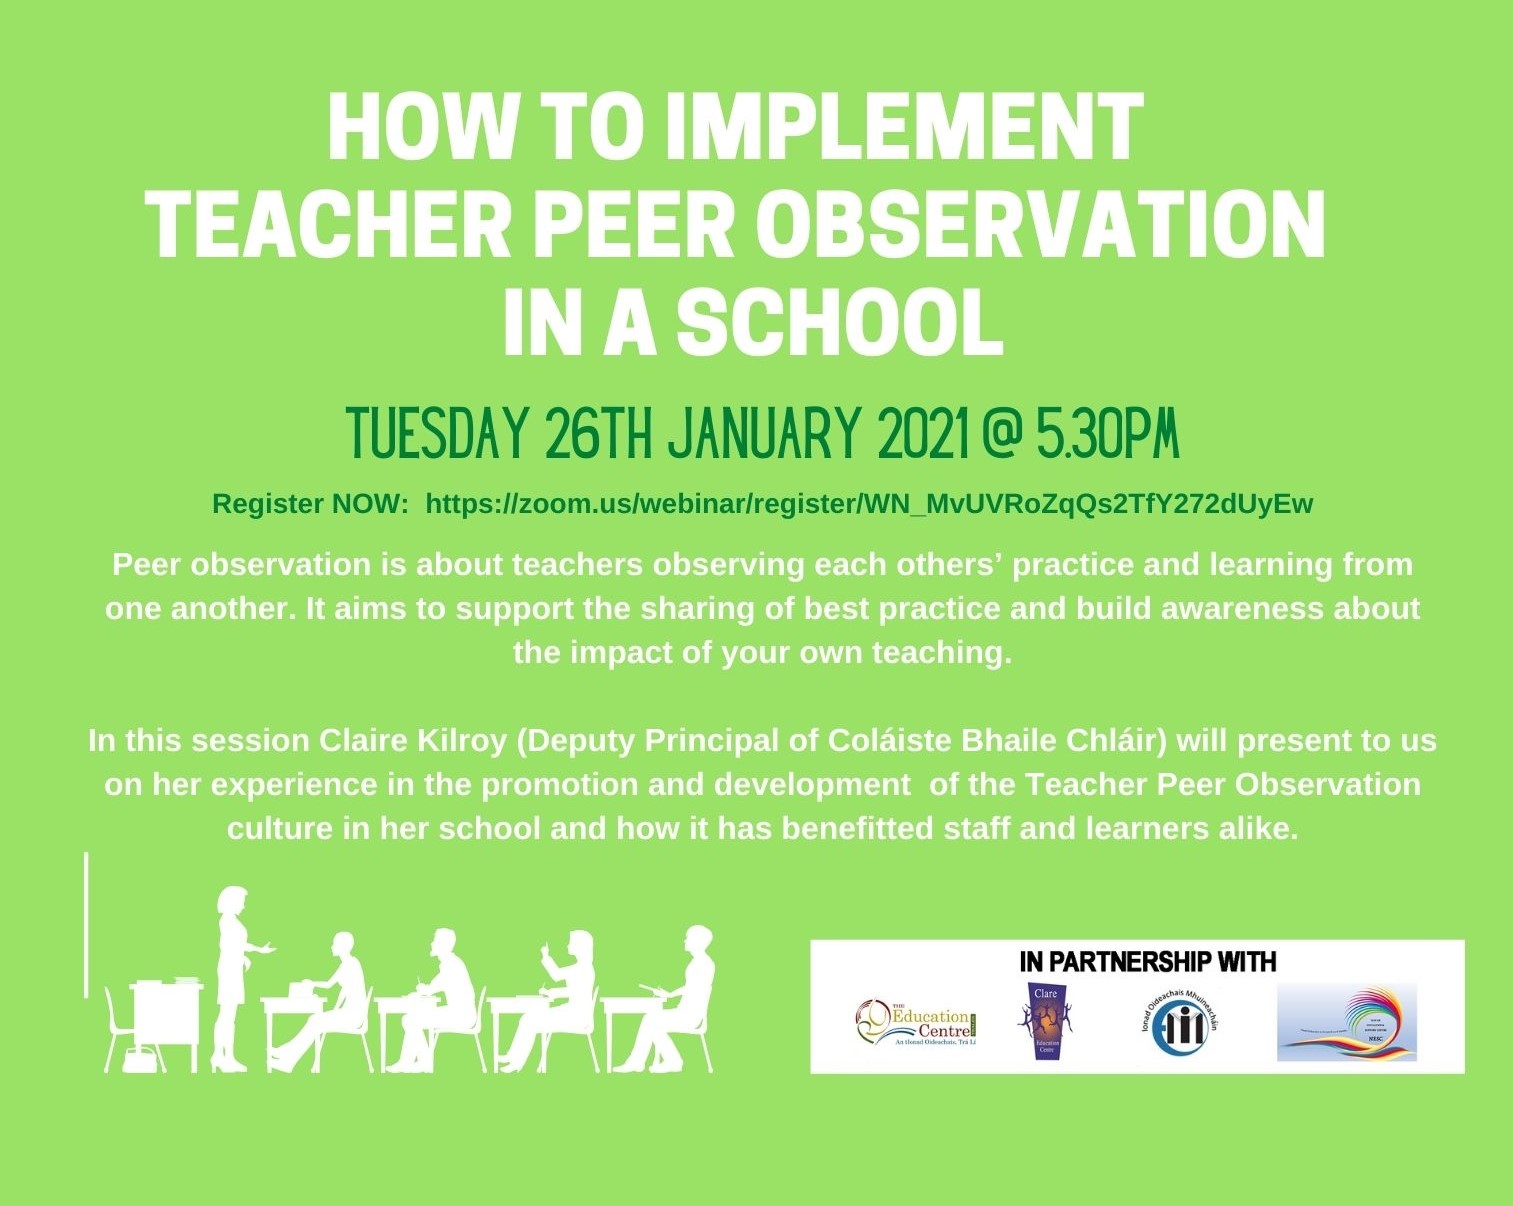 Jan 26 How to implement teacher peer observation in a school